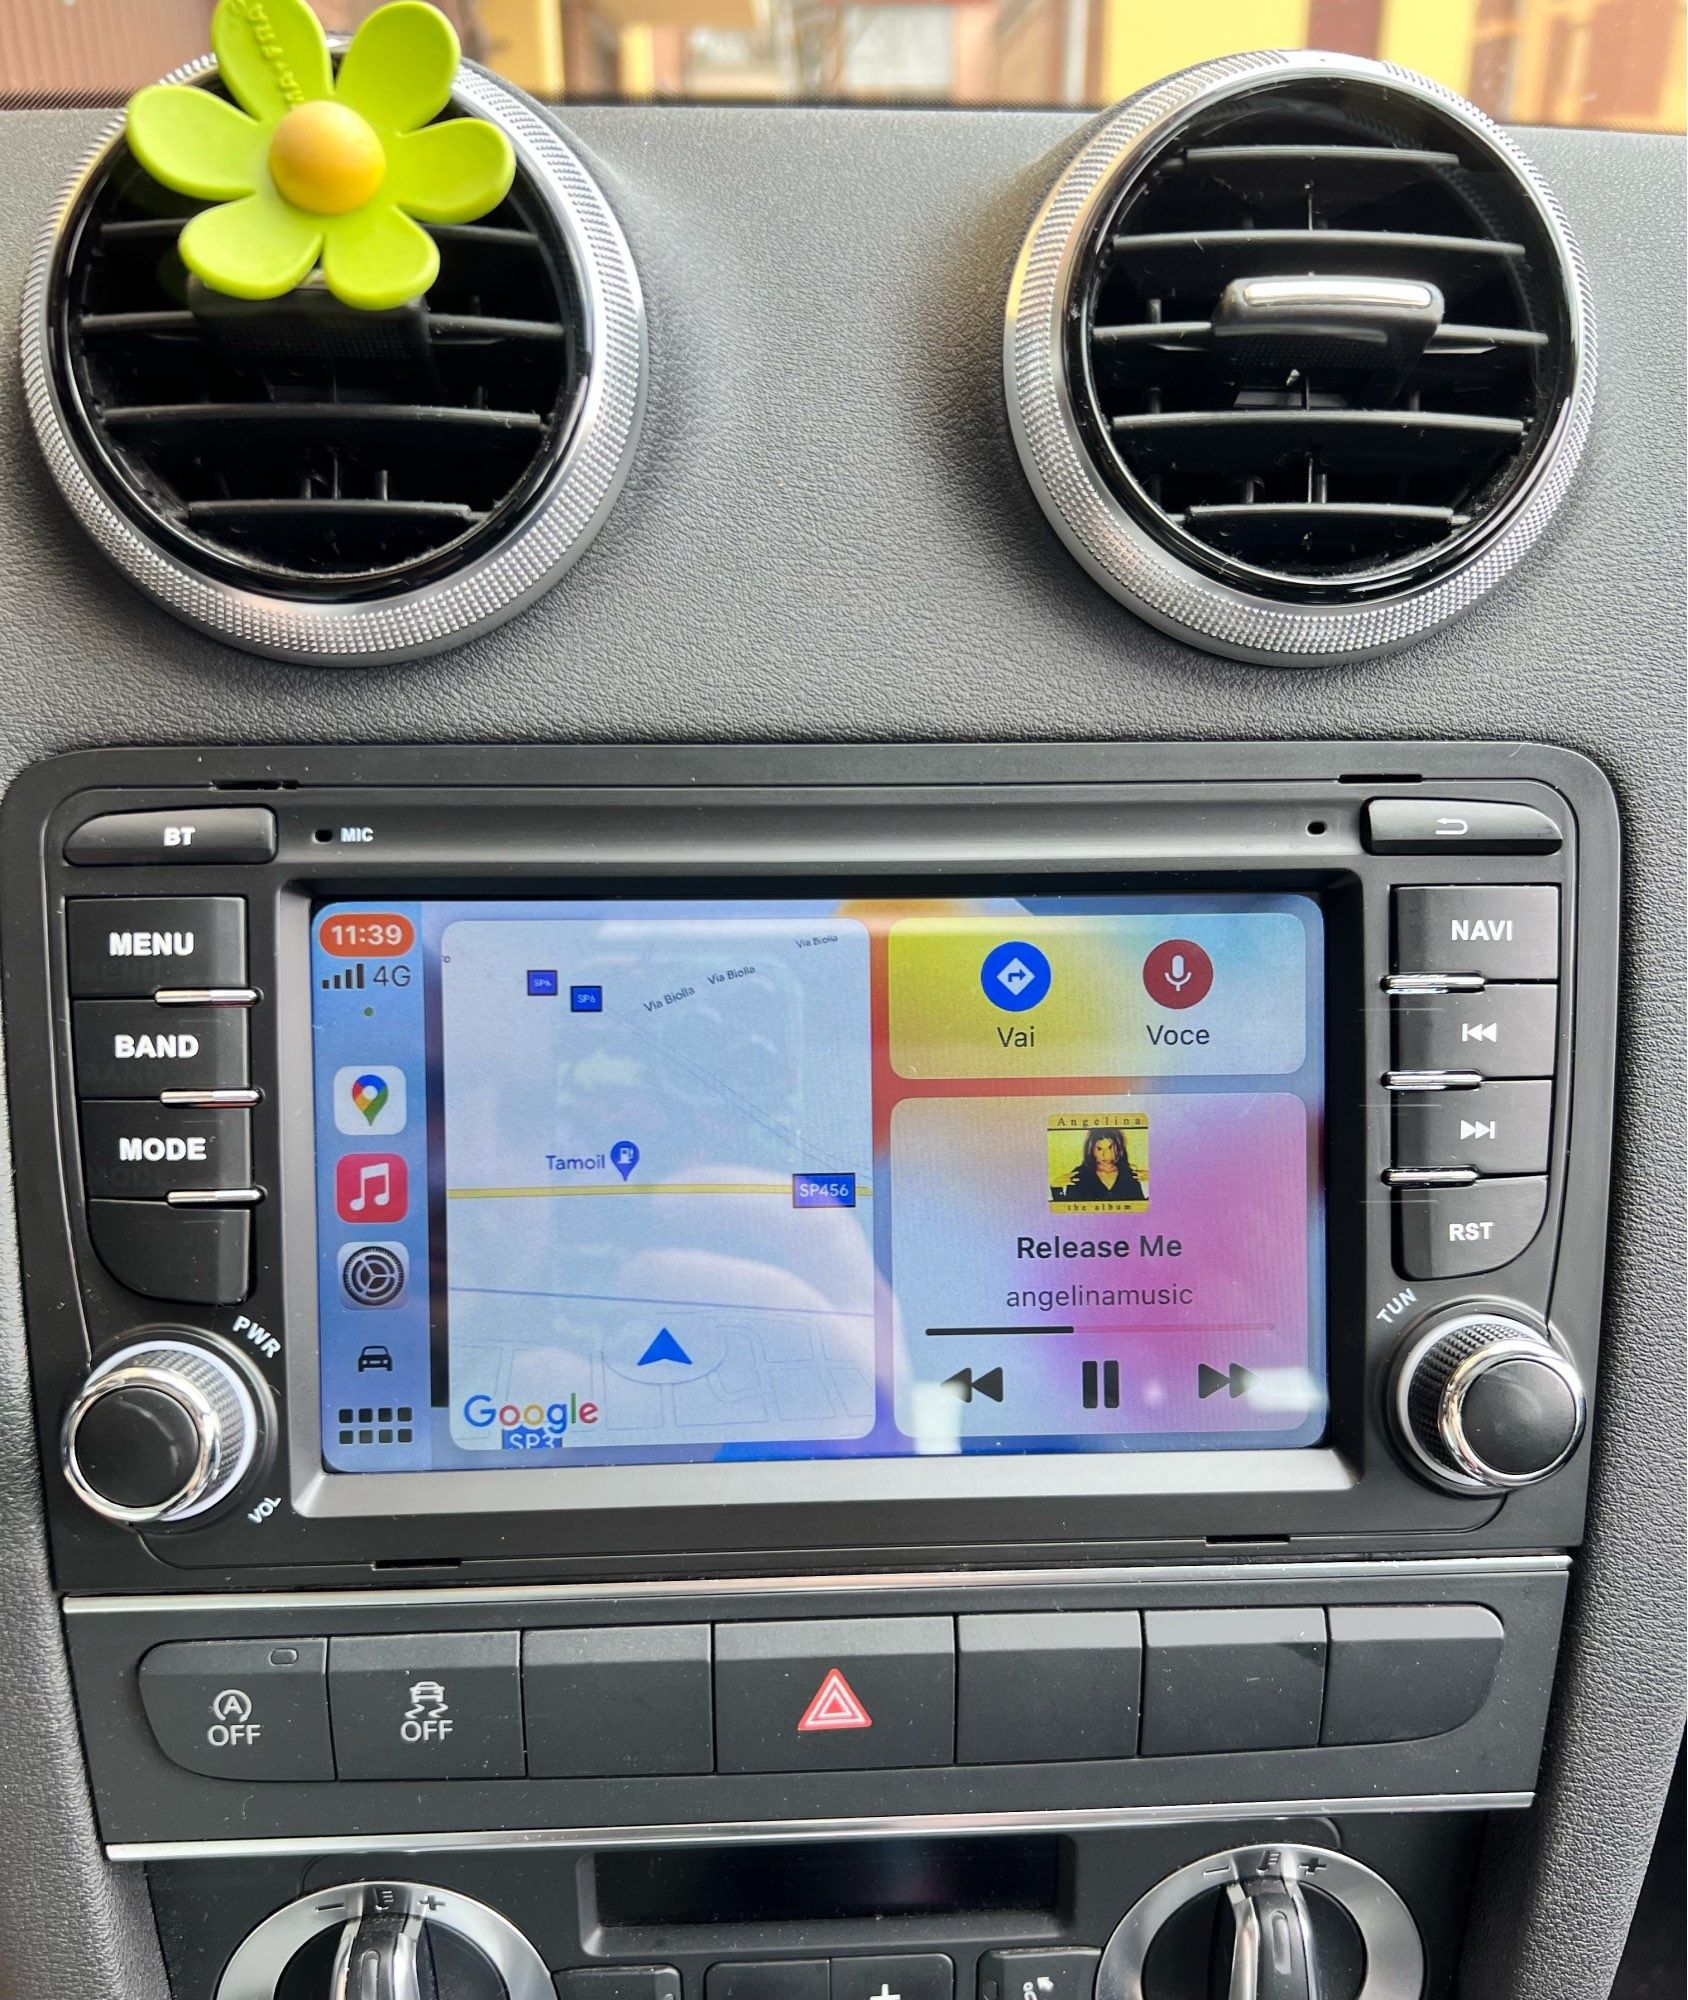 Navigatie Android Audi A3 Carplay 2GB Waze YouTube GPS BT casetofon